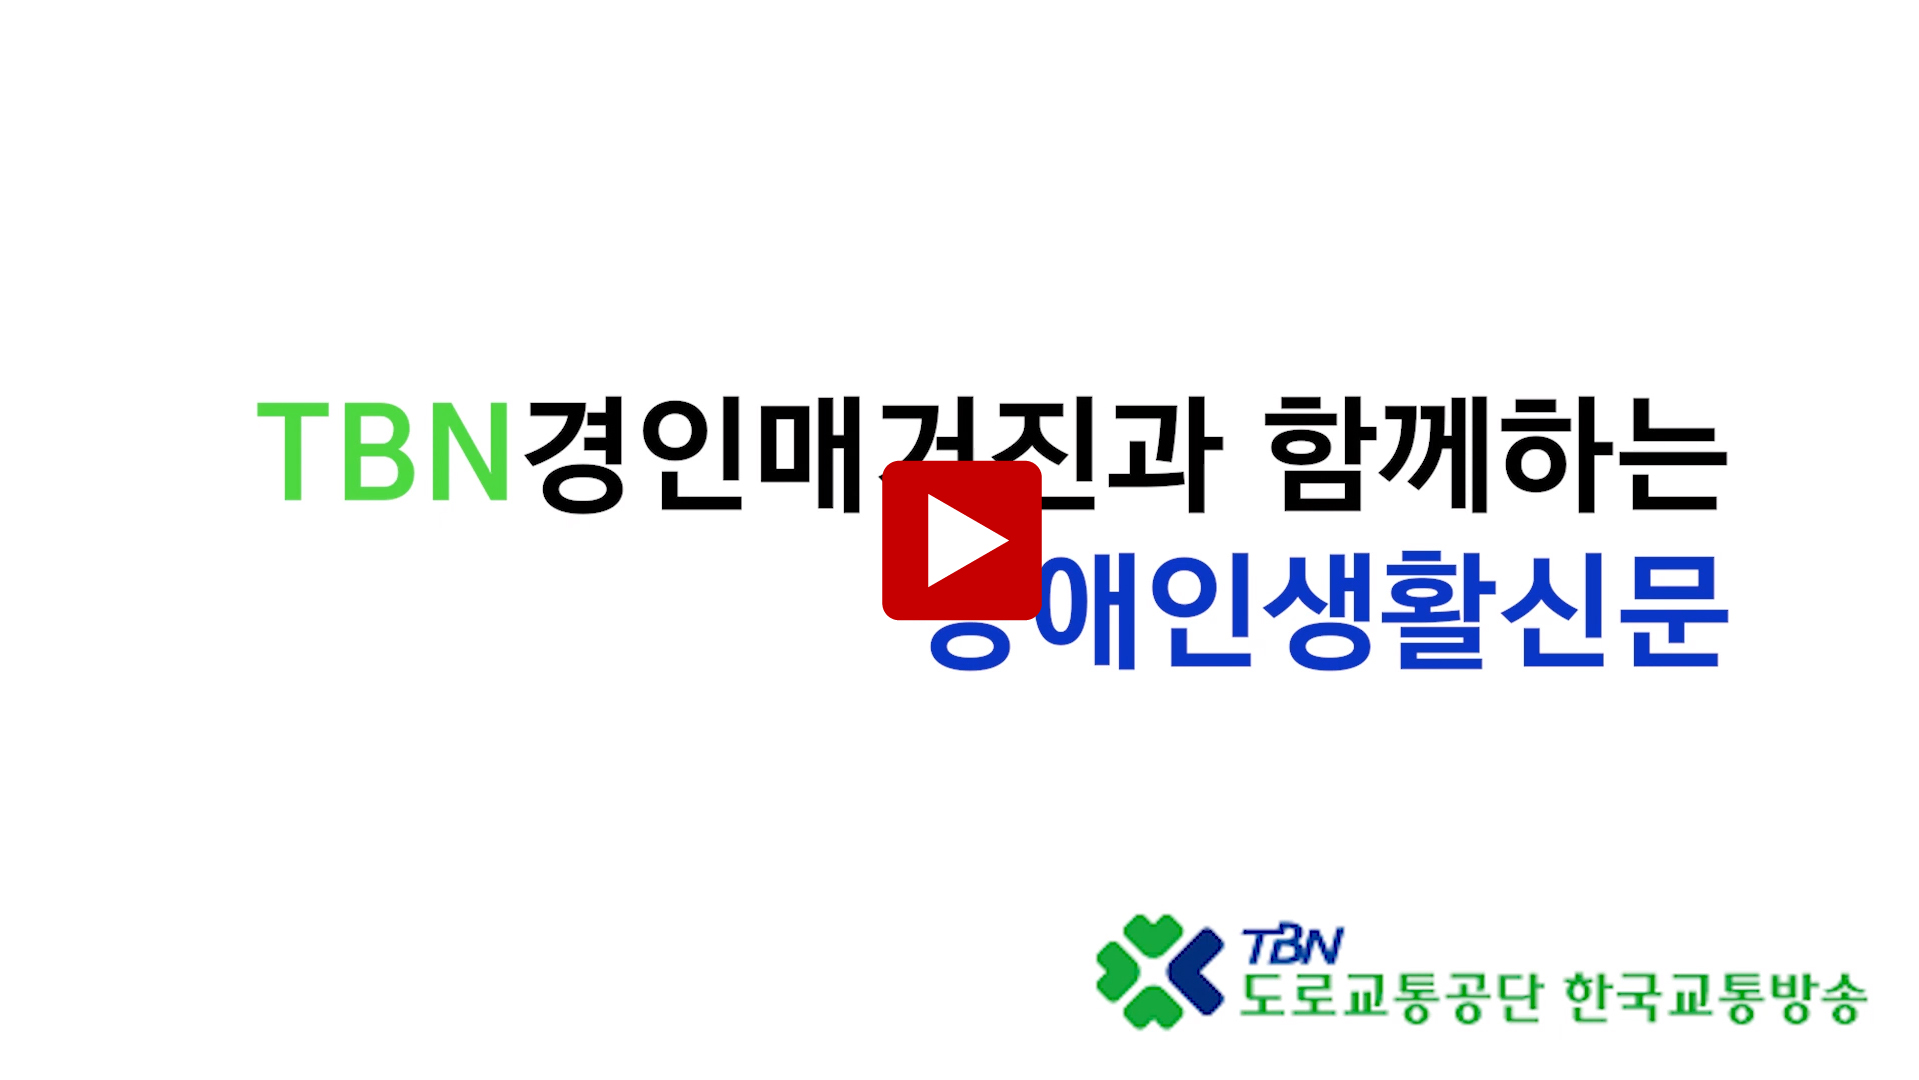 TBN경인매거진과 함께하는 장애인생활신문 -2021년 10월 20일 방송